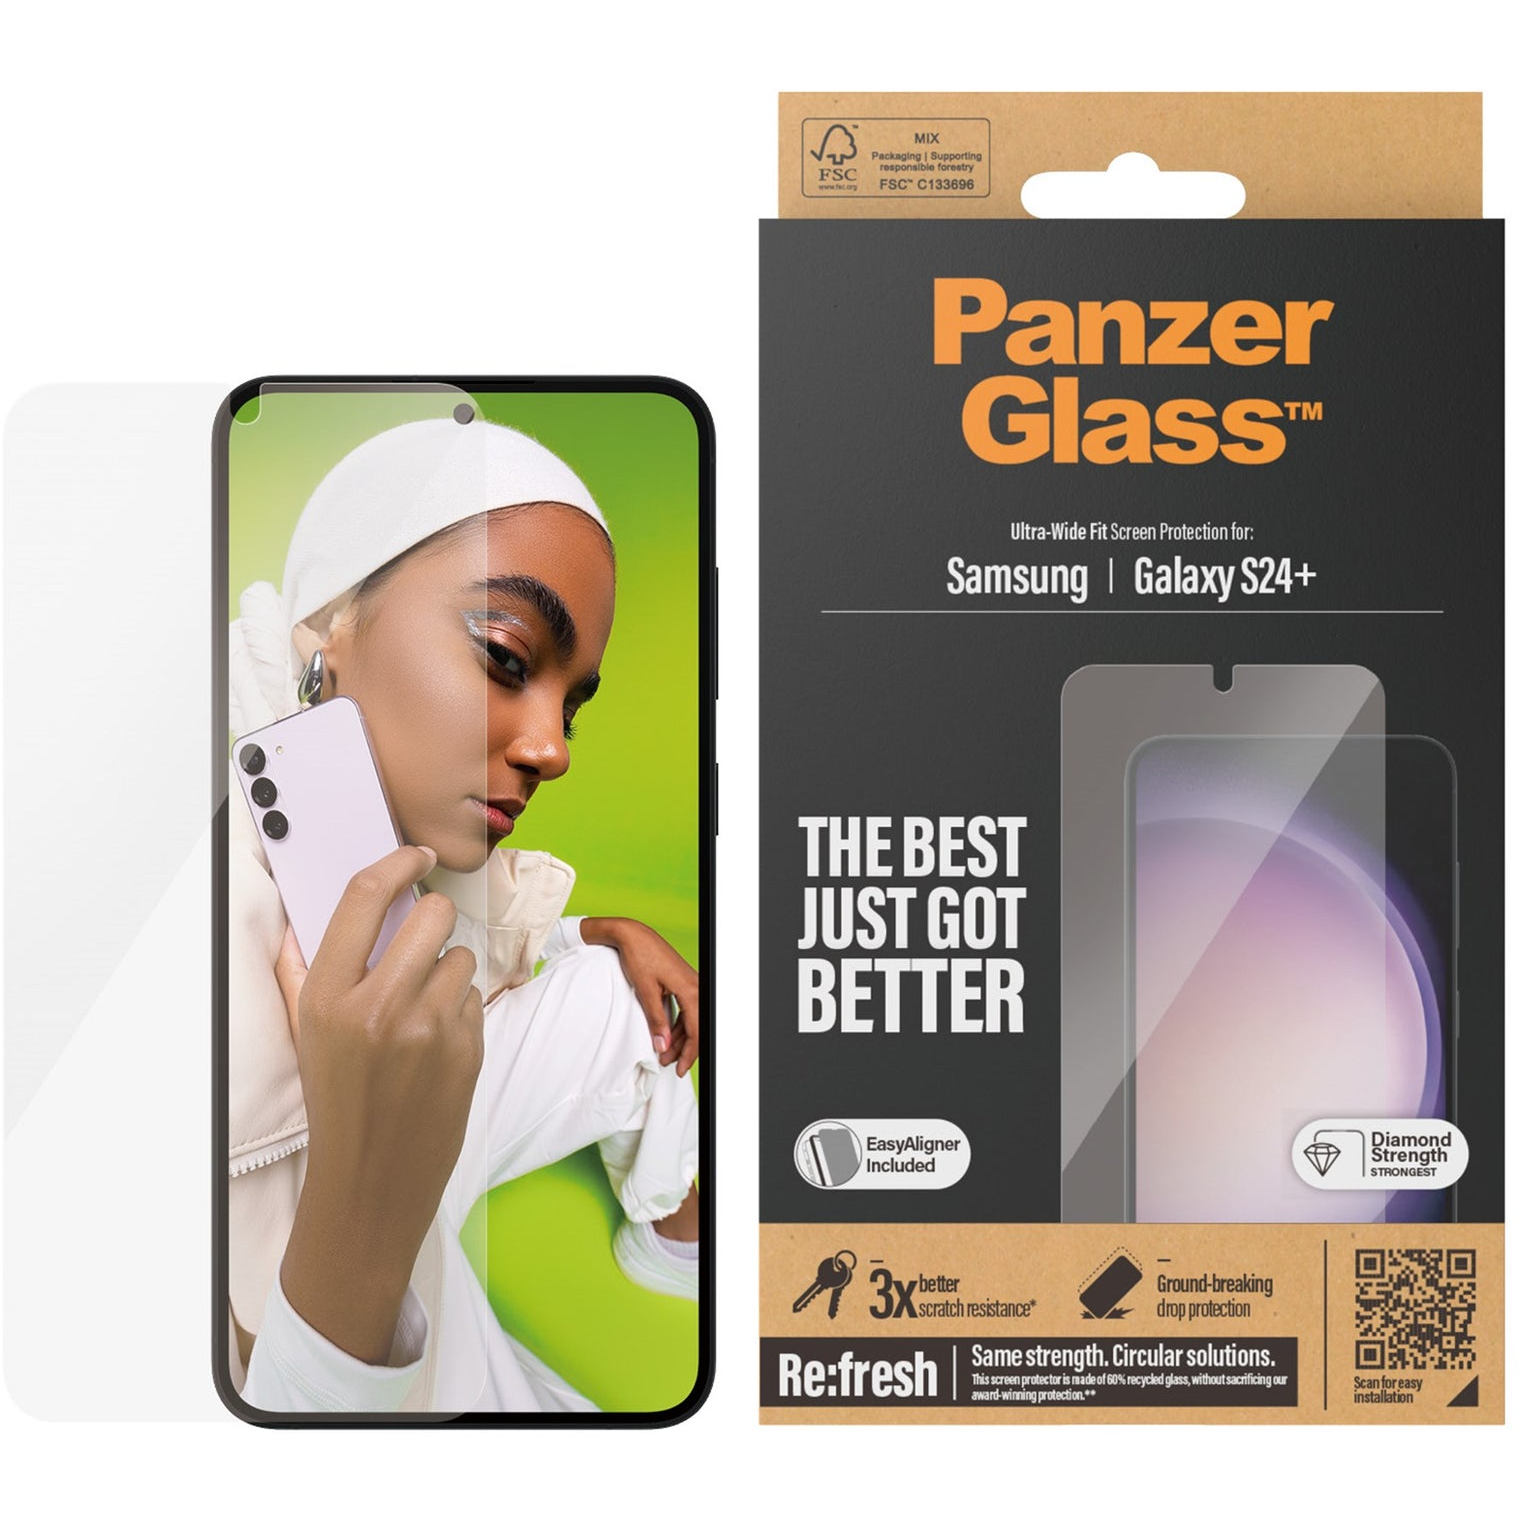 PanzerGlass Screen Protector Samsung Galaxy S24+ - Ultra-Wid